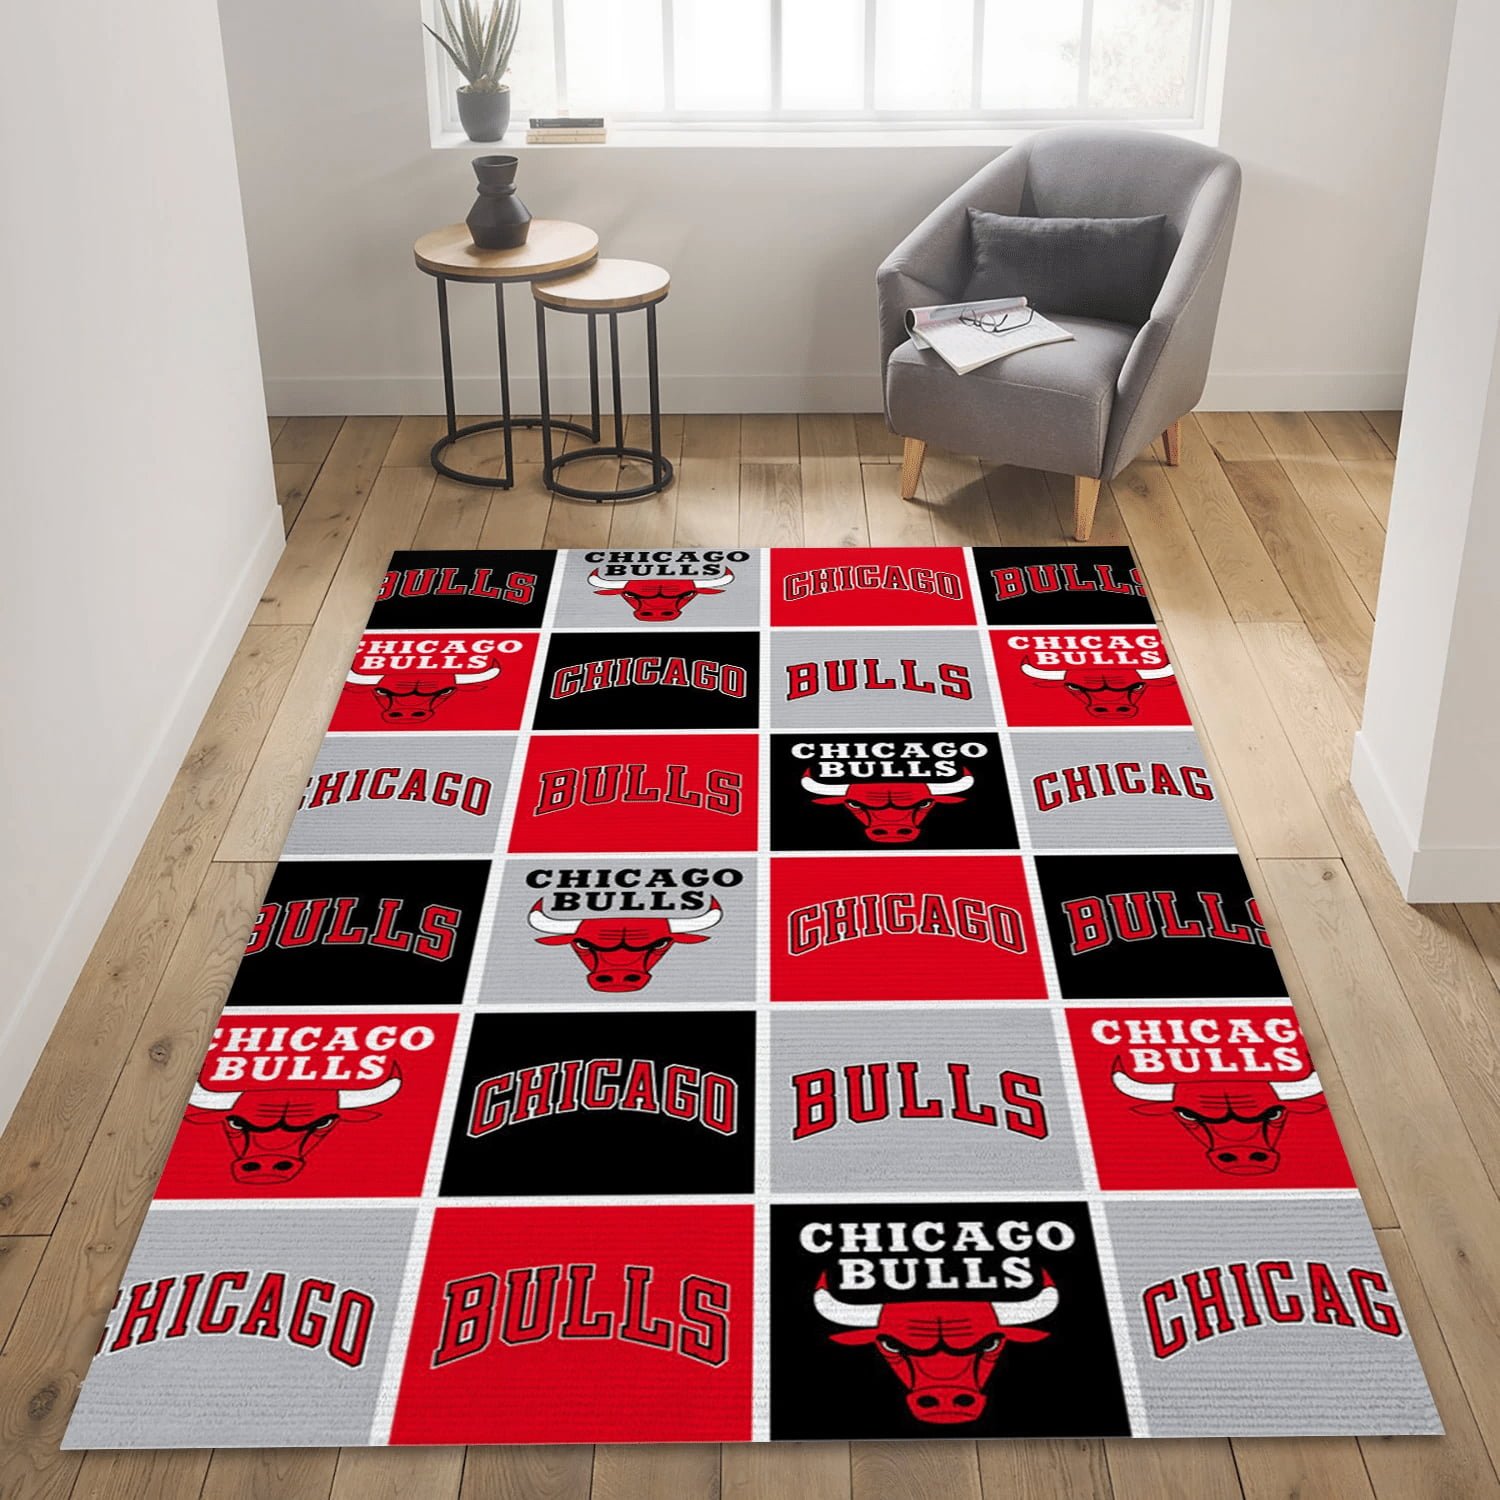 Chicago Bulls Patterns 3 Team Logos Area Rug, Living Room Rug - US Gift Decor - Indoor Outdoor Rugs